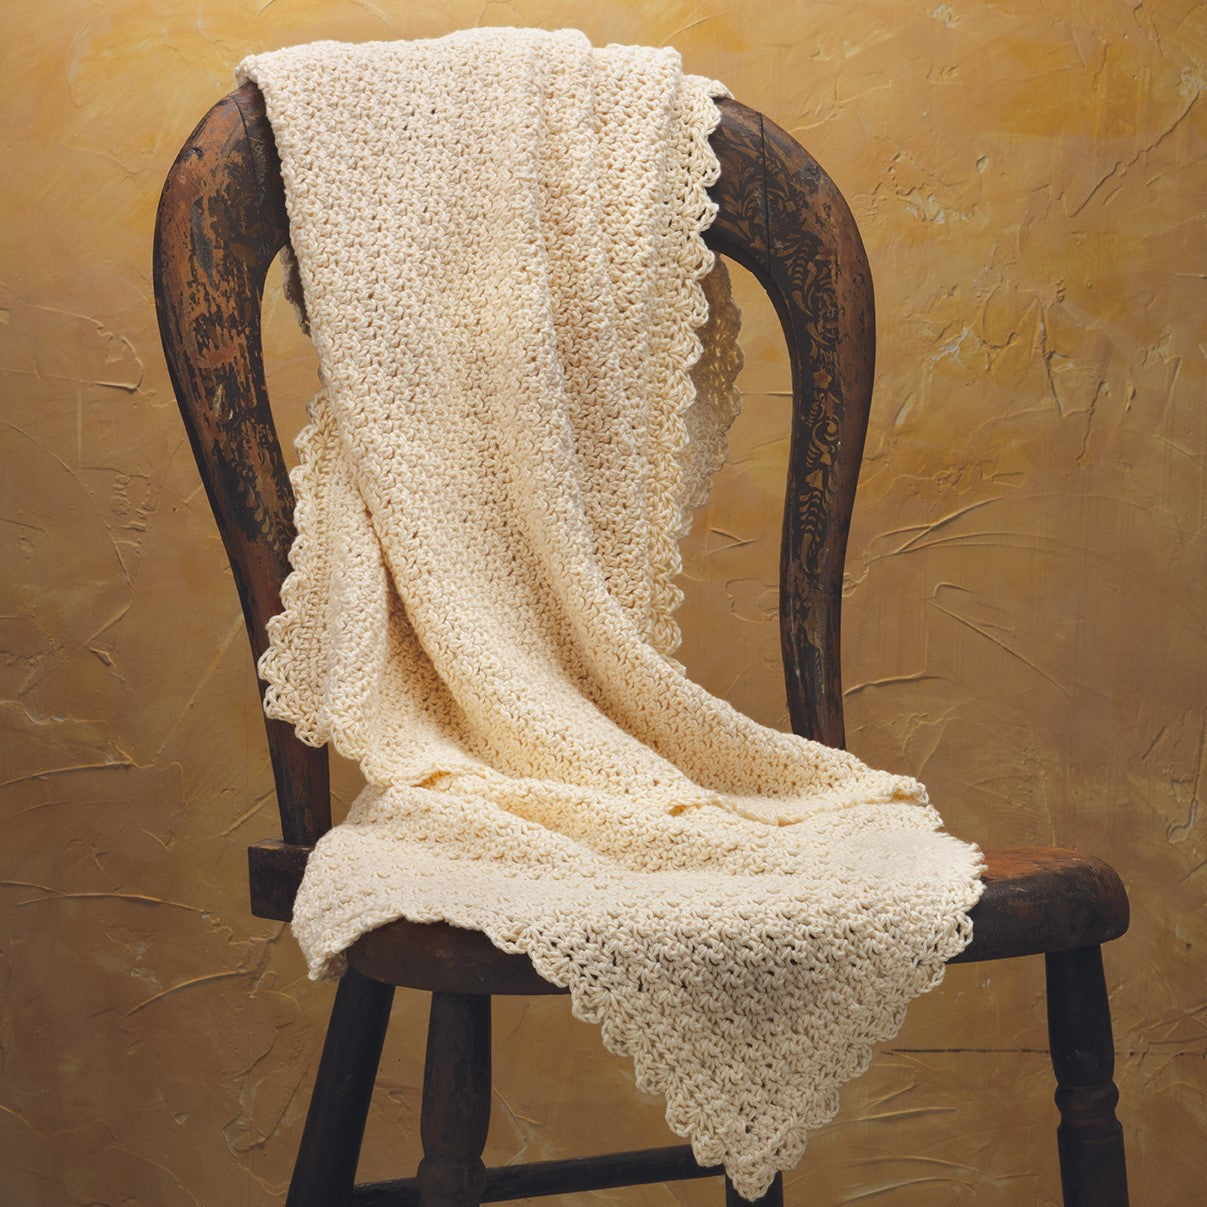 Abrielle Crochet Baby Blanket Pattern - A Crocheted Simplicity